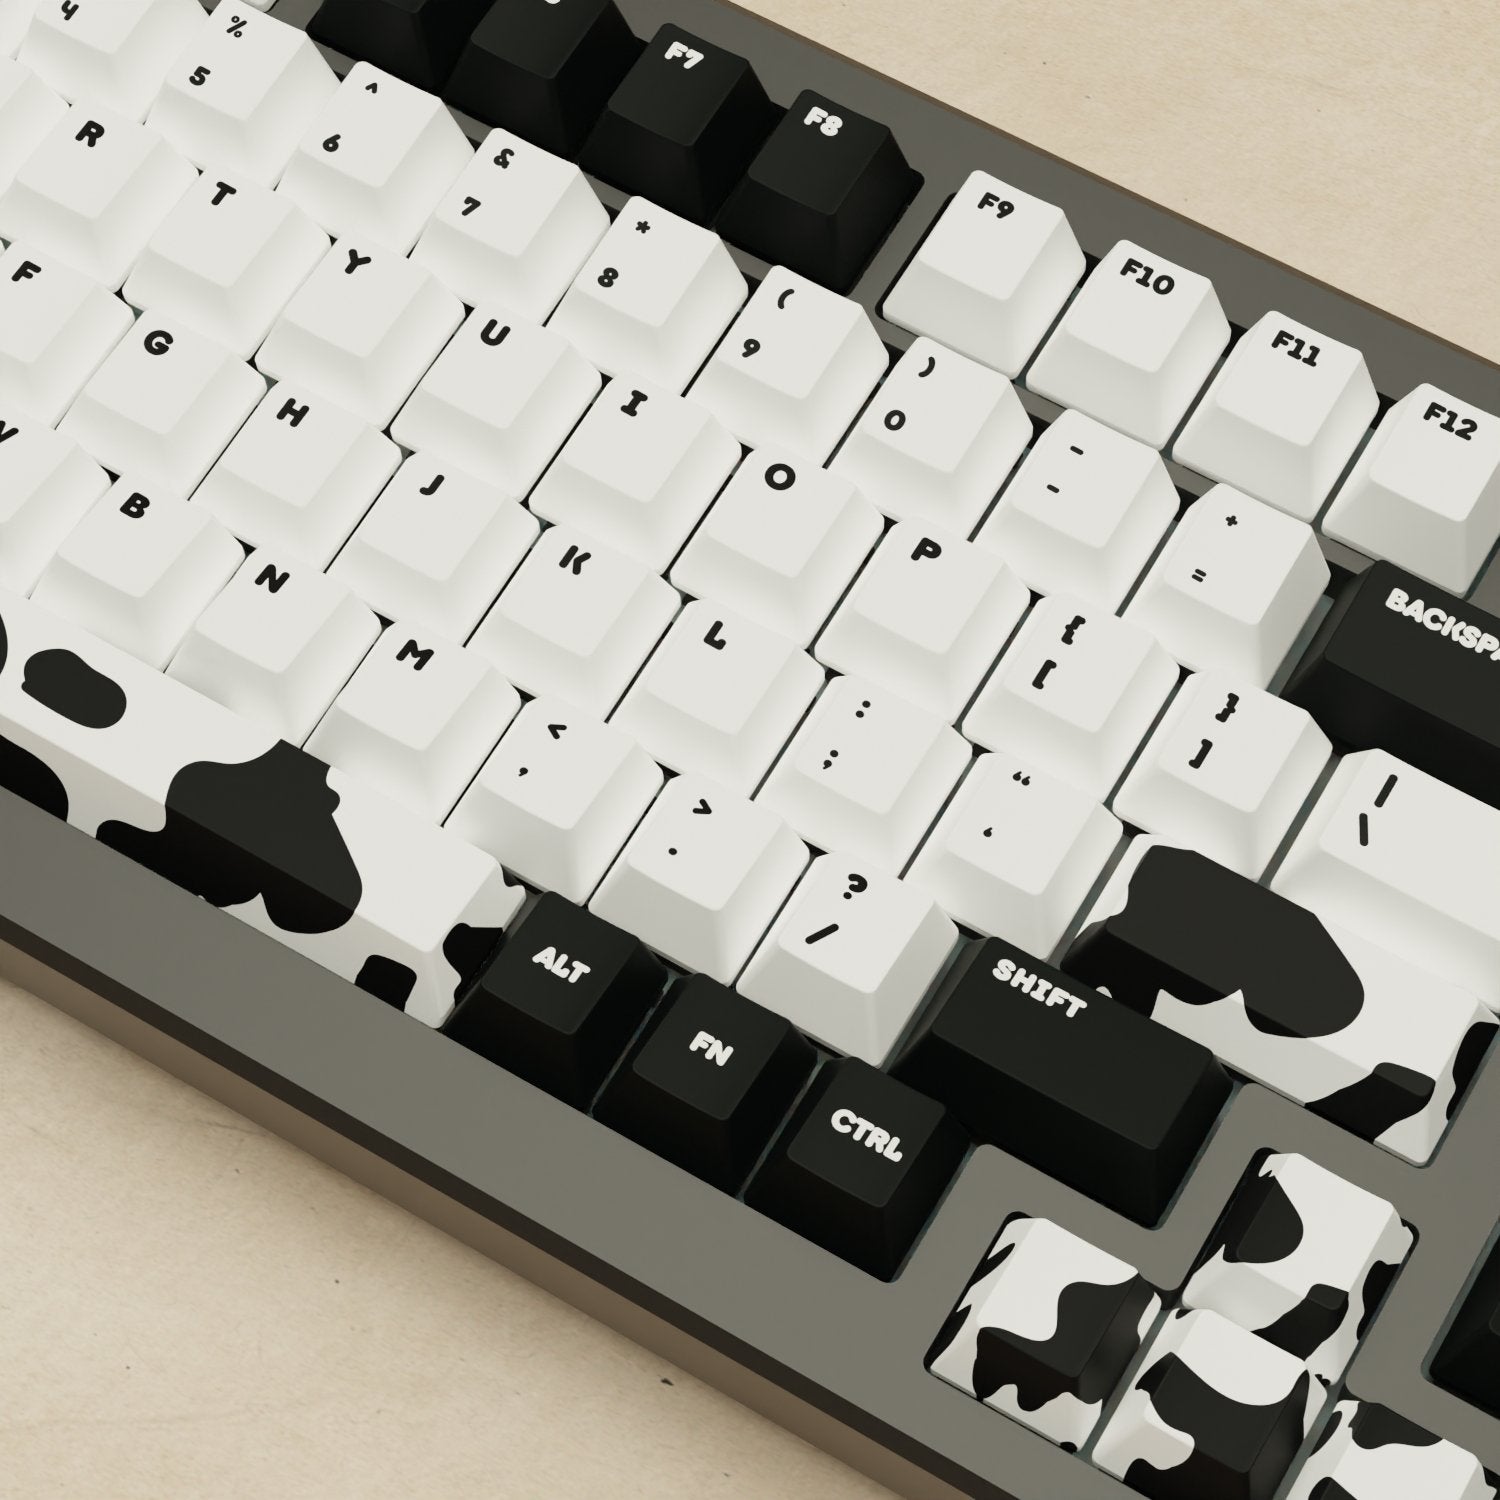 Alpha 82 - 75% Cow Mechanical Keyboard - Goblintechkeys